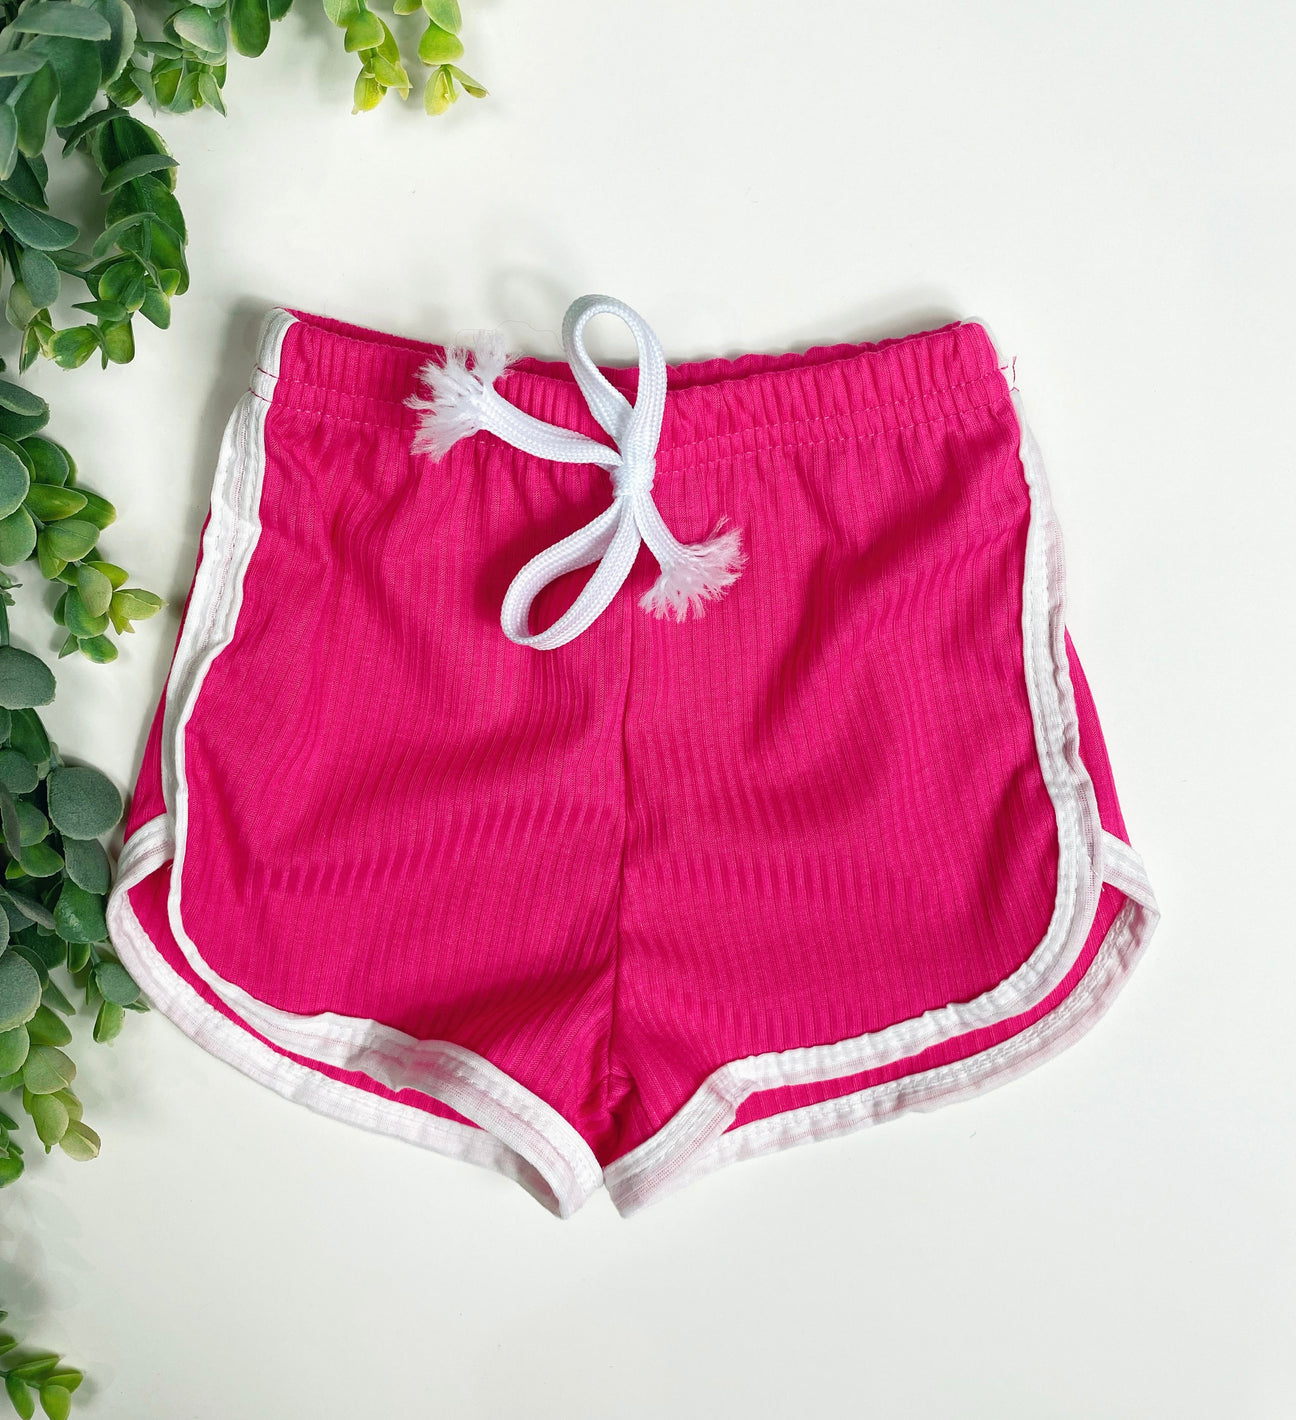 Hot pink track shorts